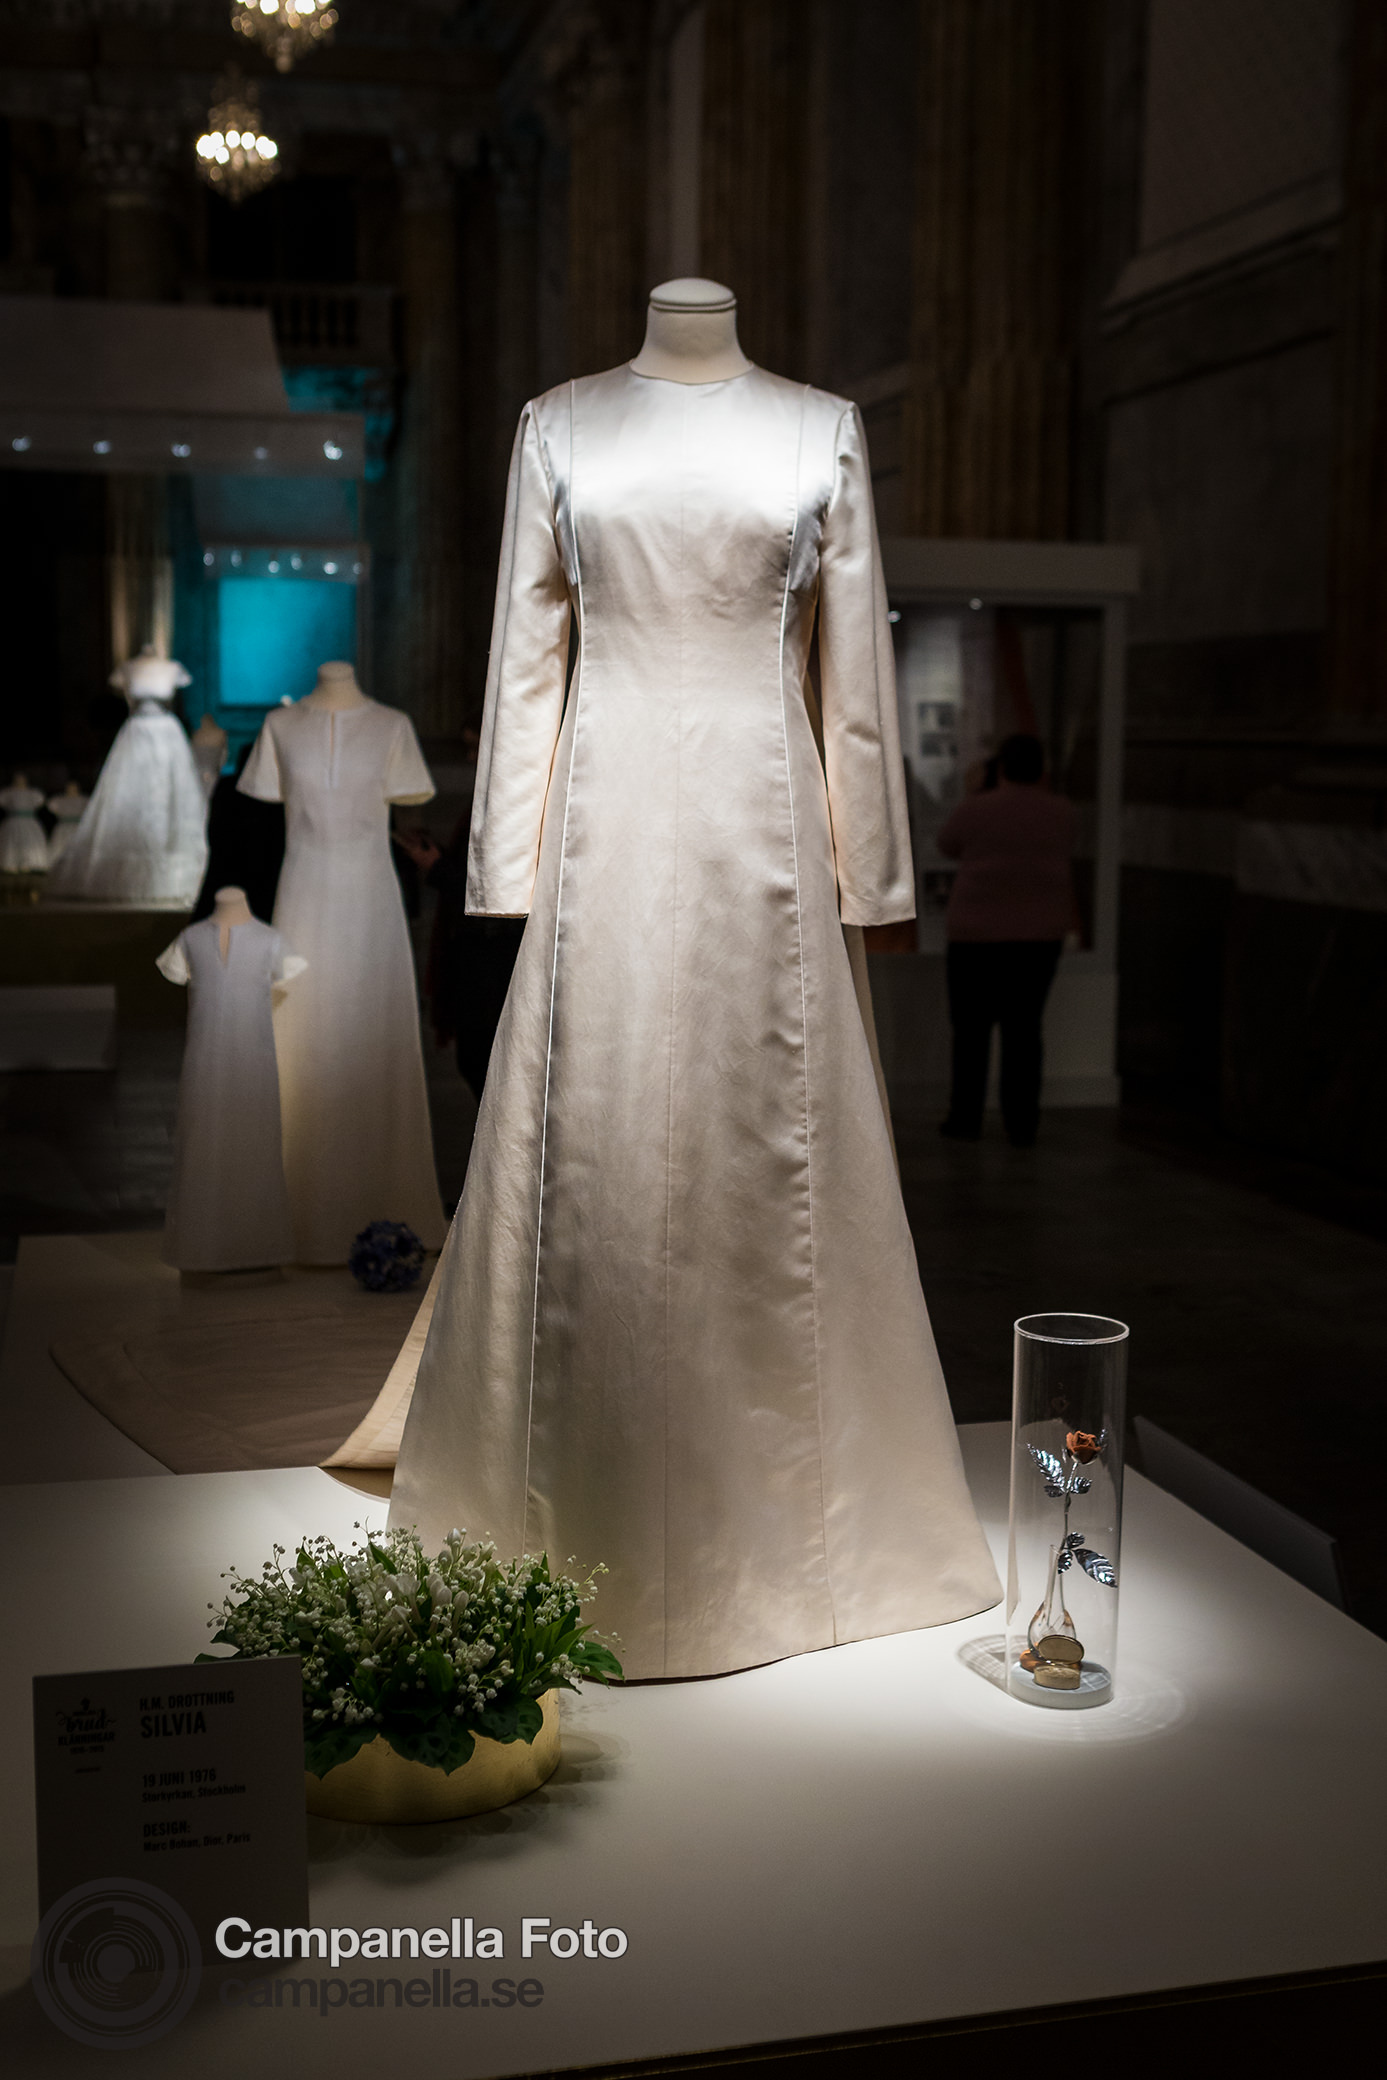 Royal wedding dresses exhibition - Michael Campanella Photography